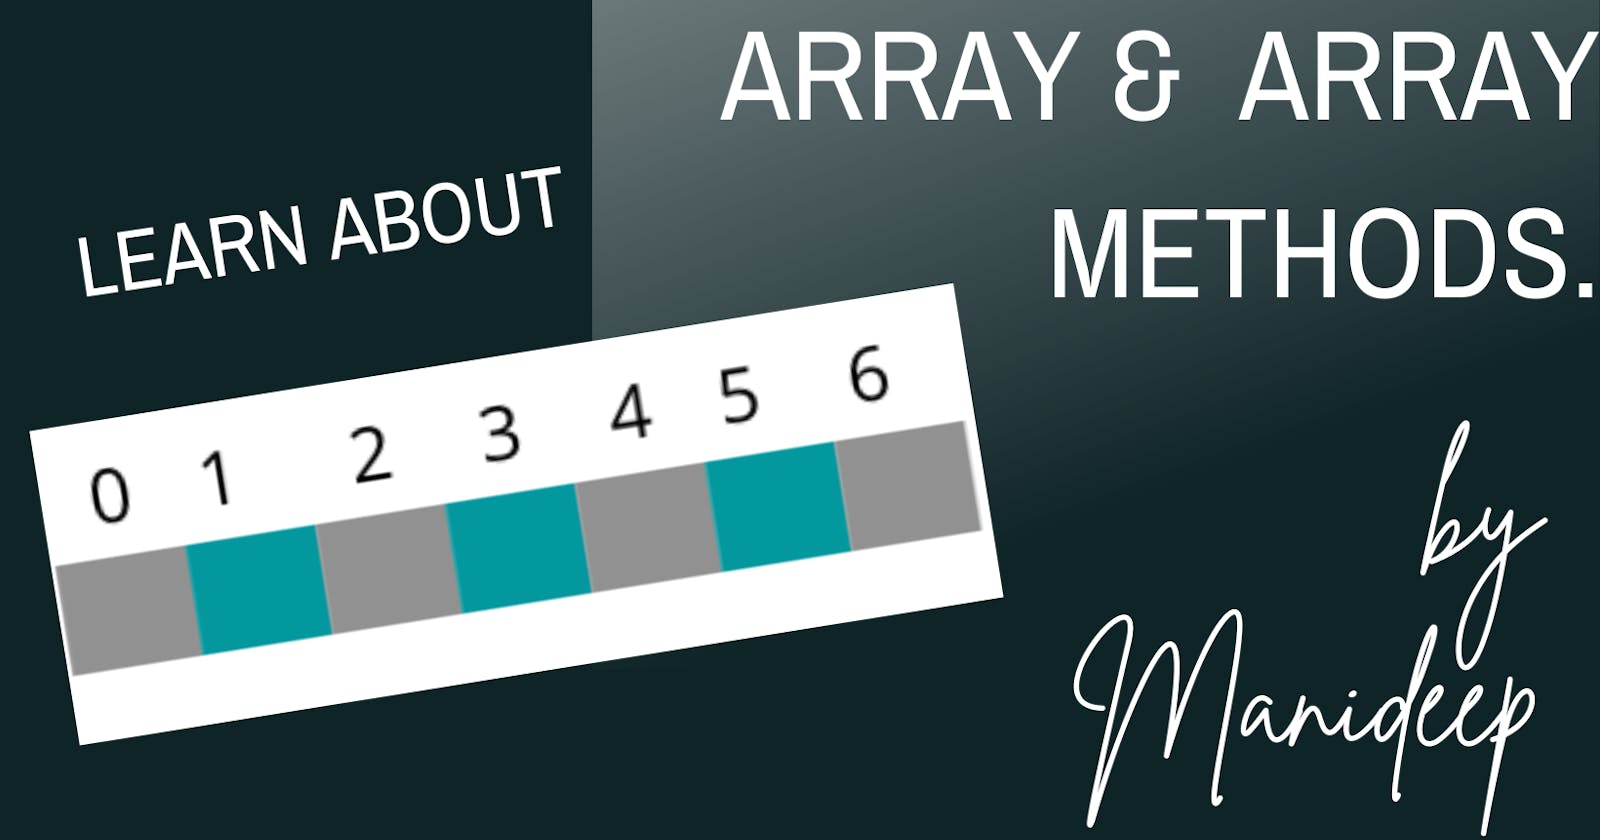 Let's learn about Arrays & Array methods in Java Script